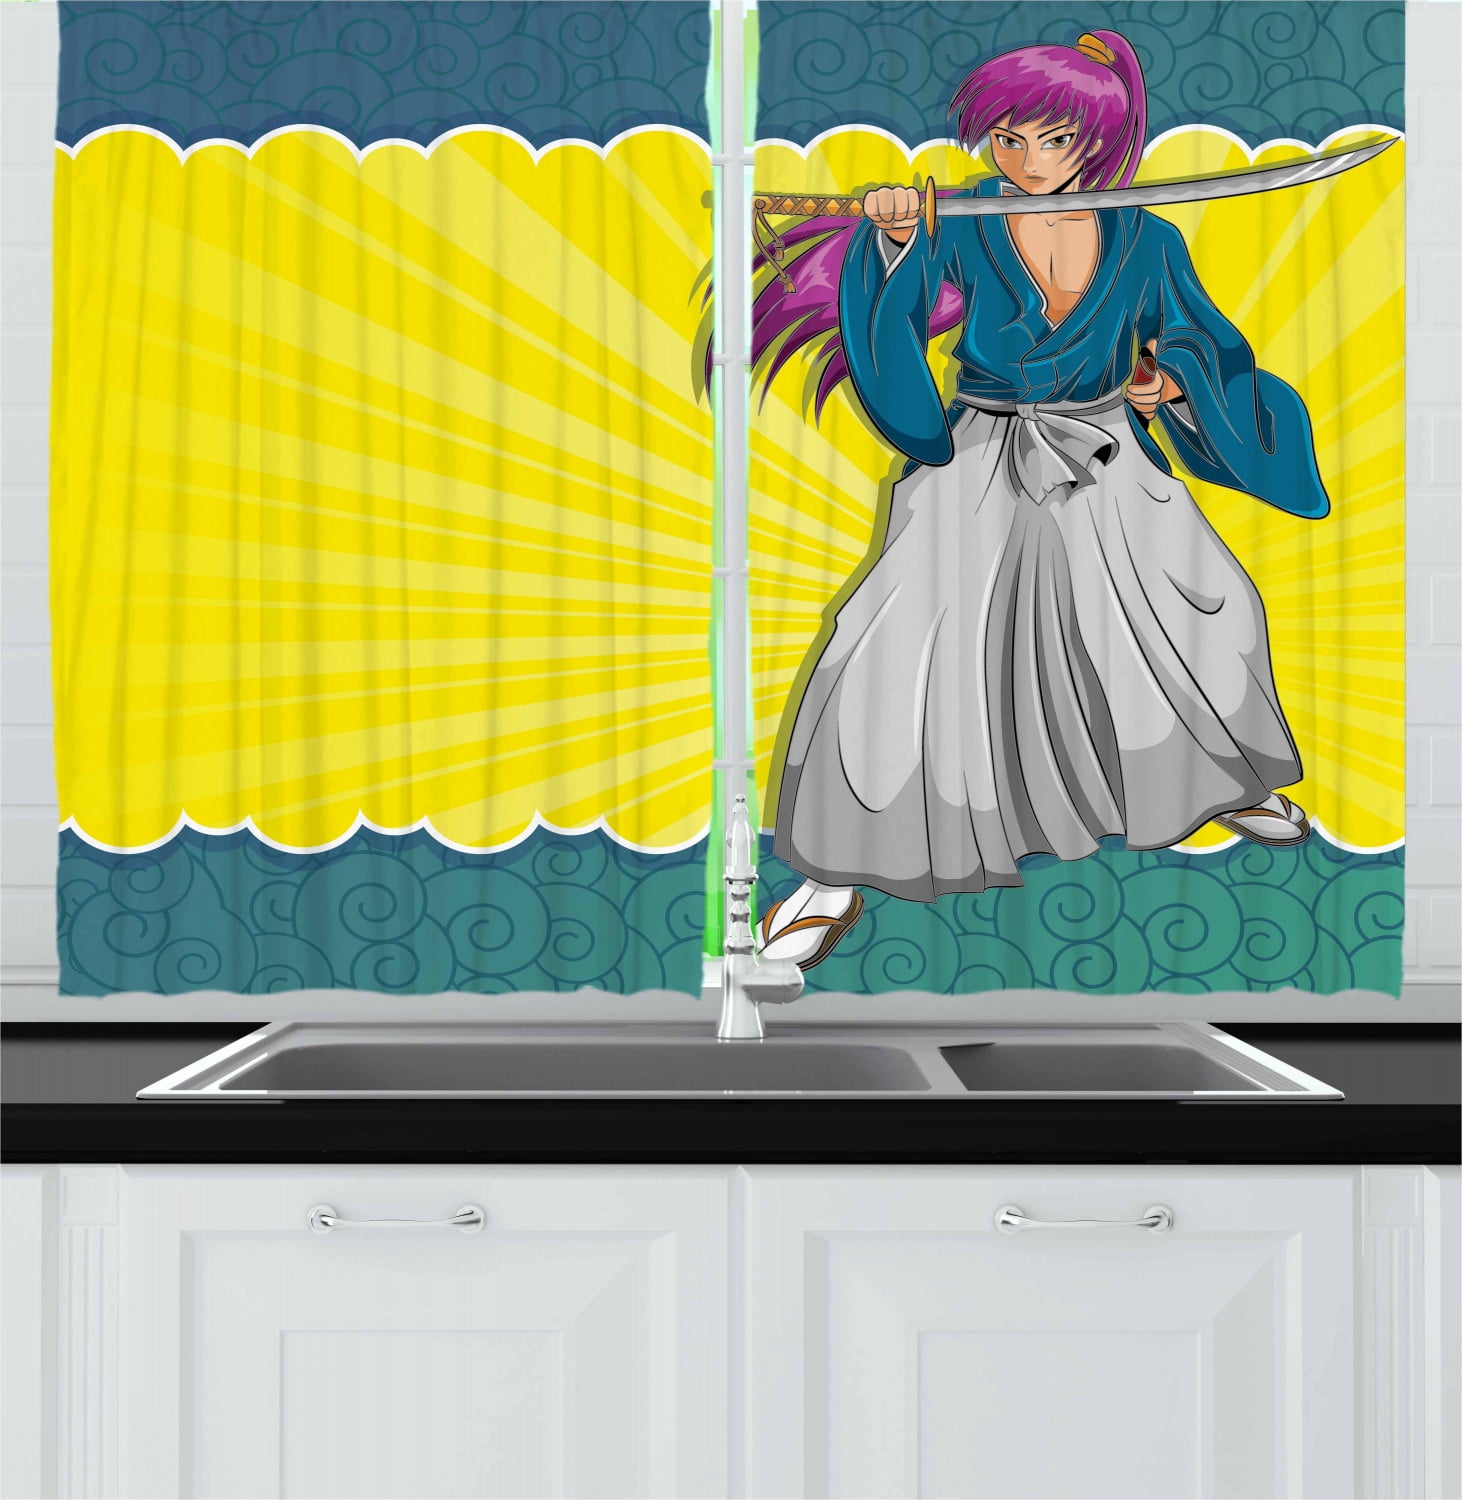 Anime Girl ecchi 60x60 Shower Curtain | CafePress